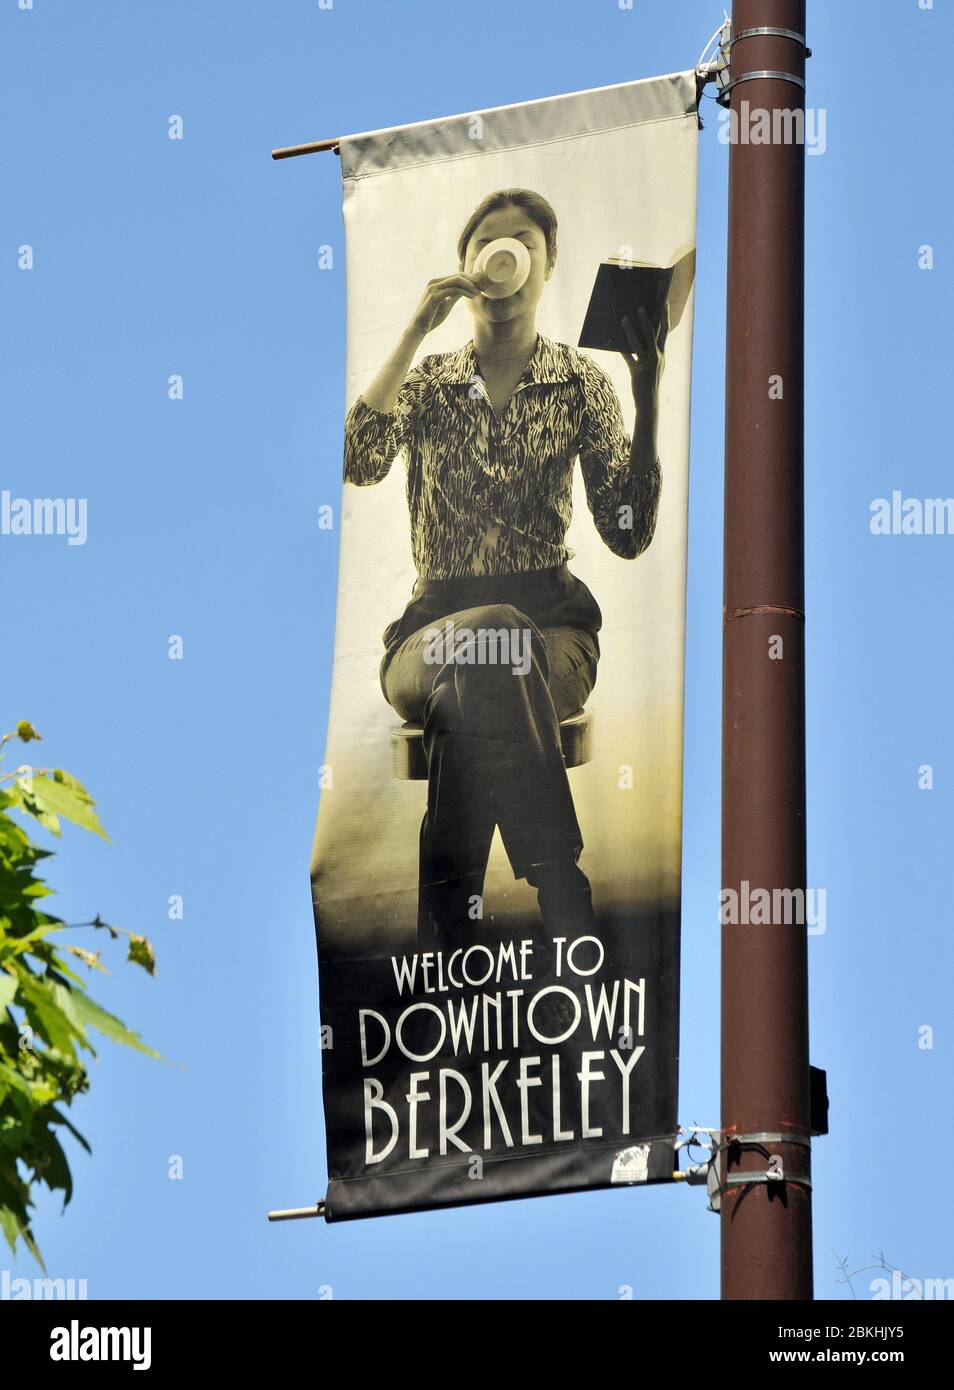 Streetlight banner welcoming visitors to downtown Berkeley, California, USA Stock Photo